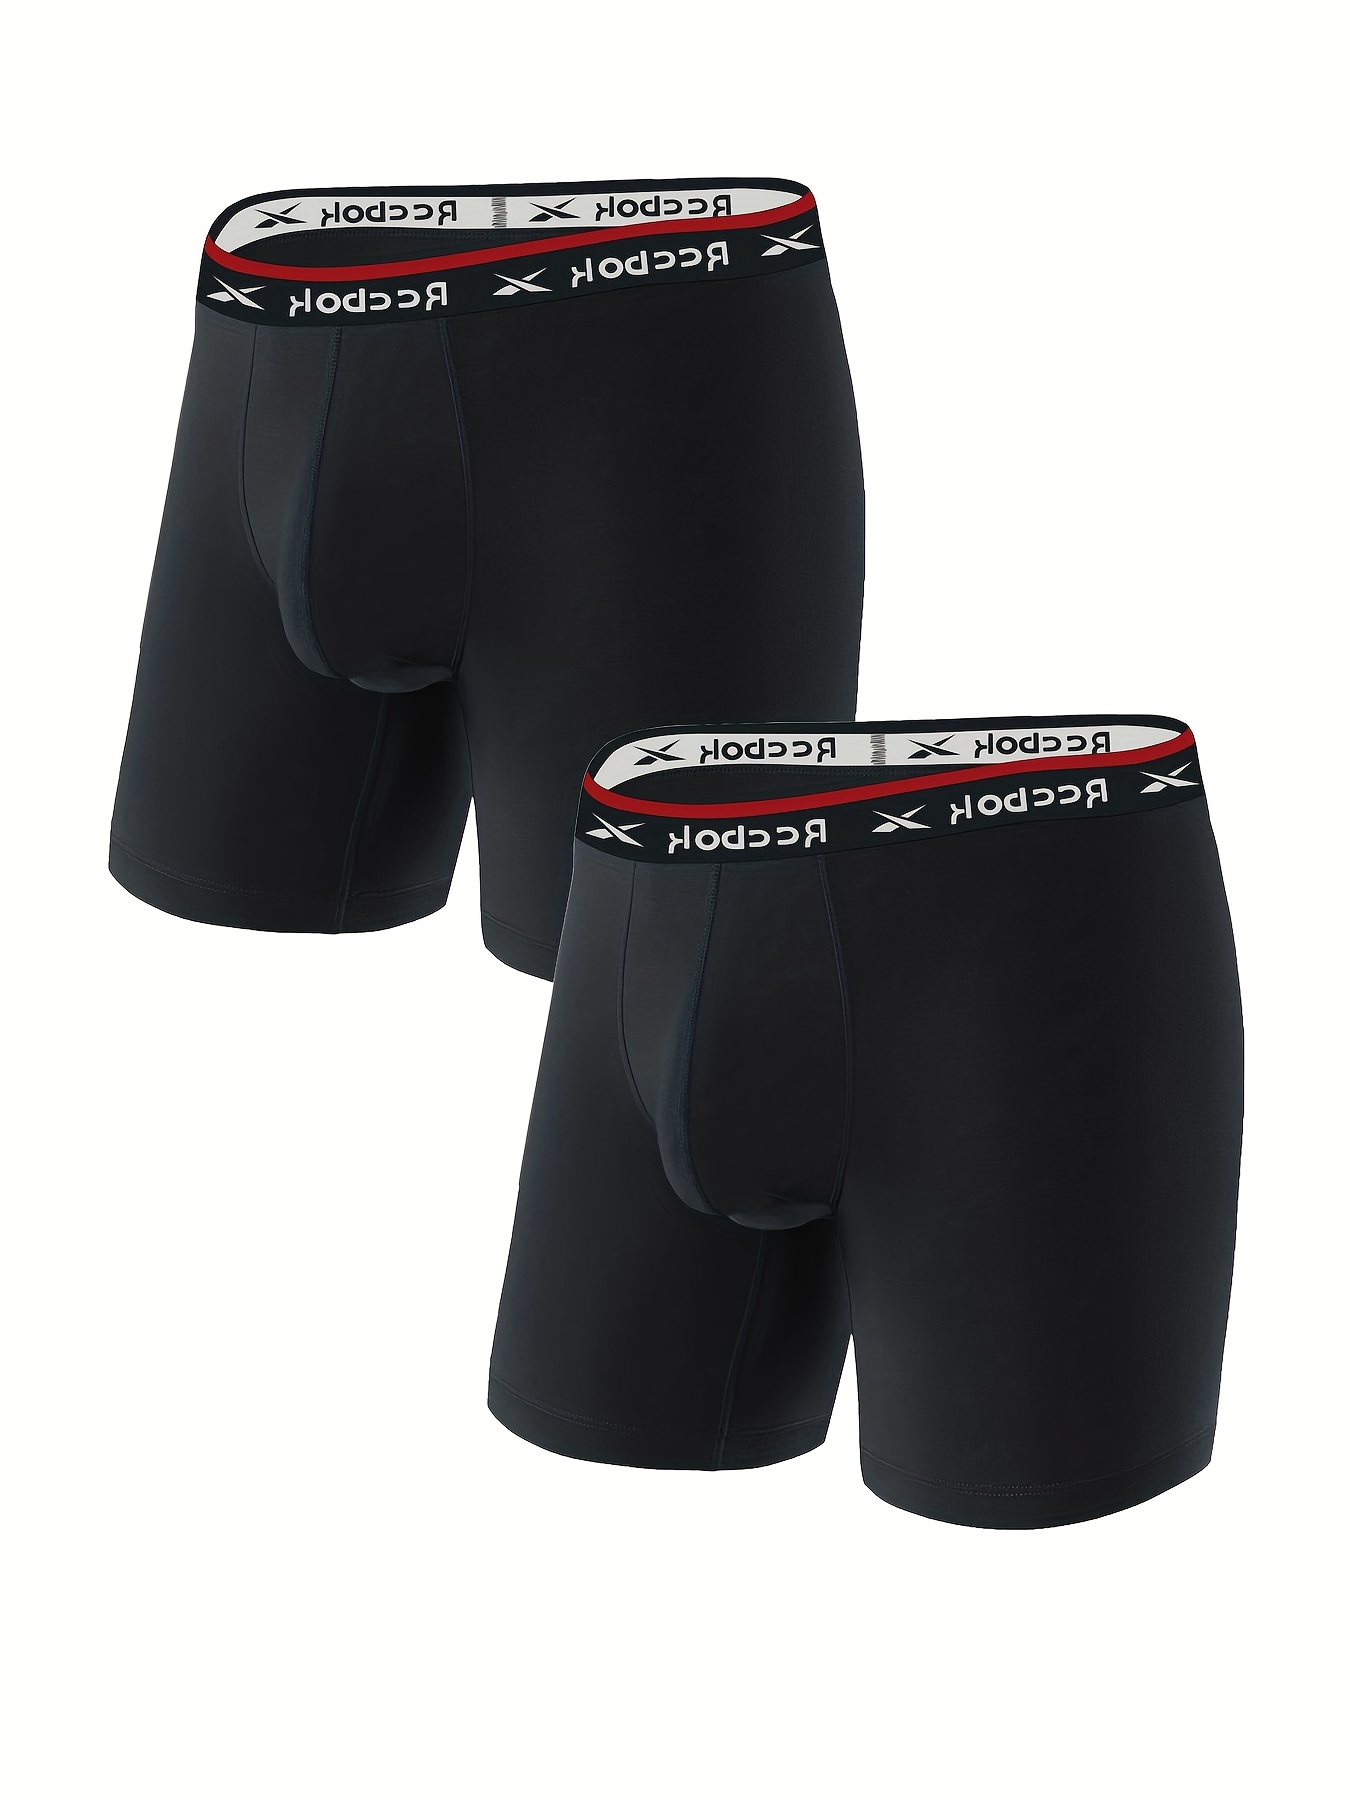 Men's Underwear Soft Comfy Breathable Trunks Boxer Brief Cute